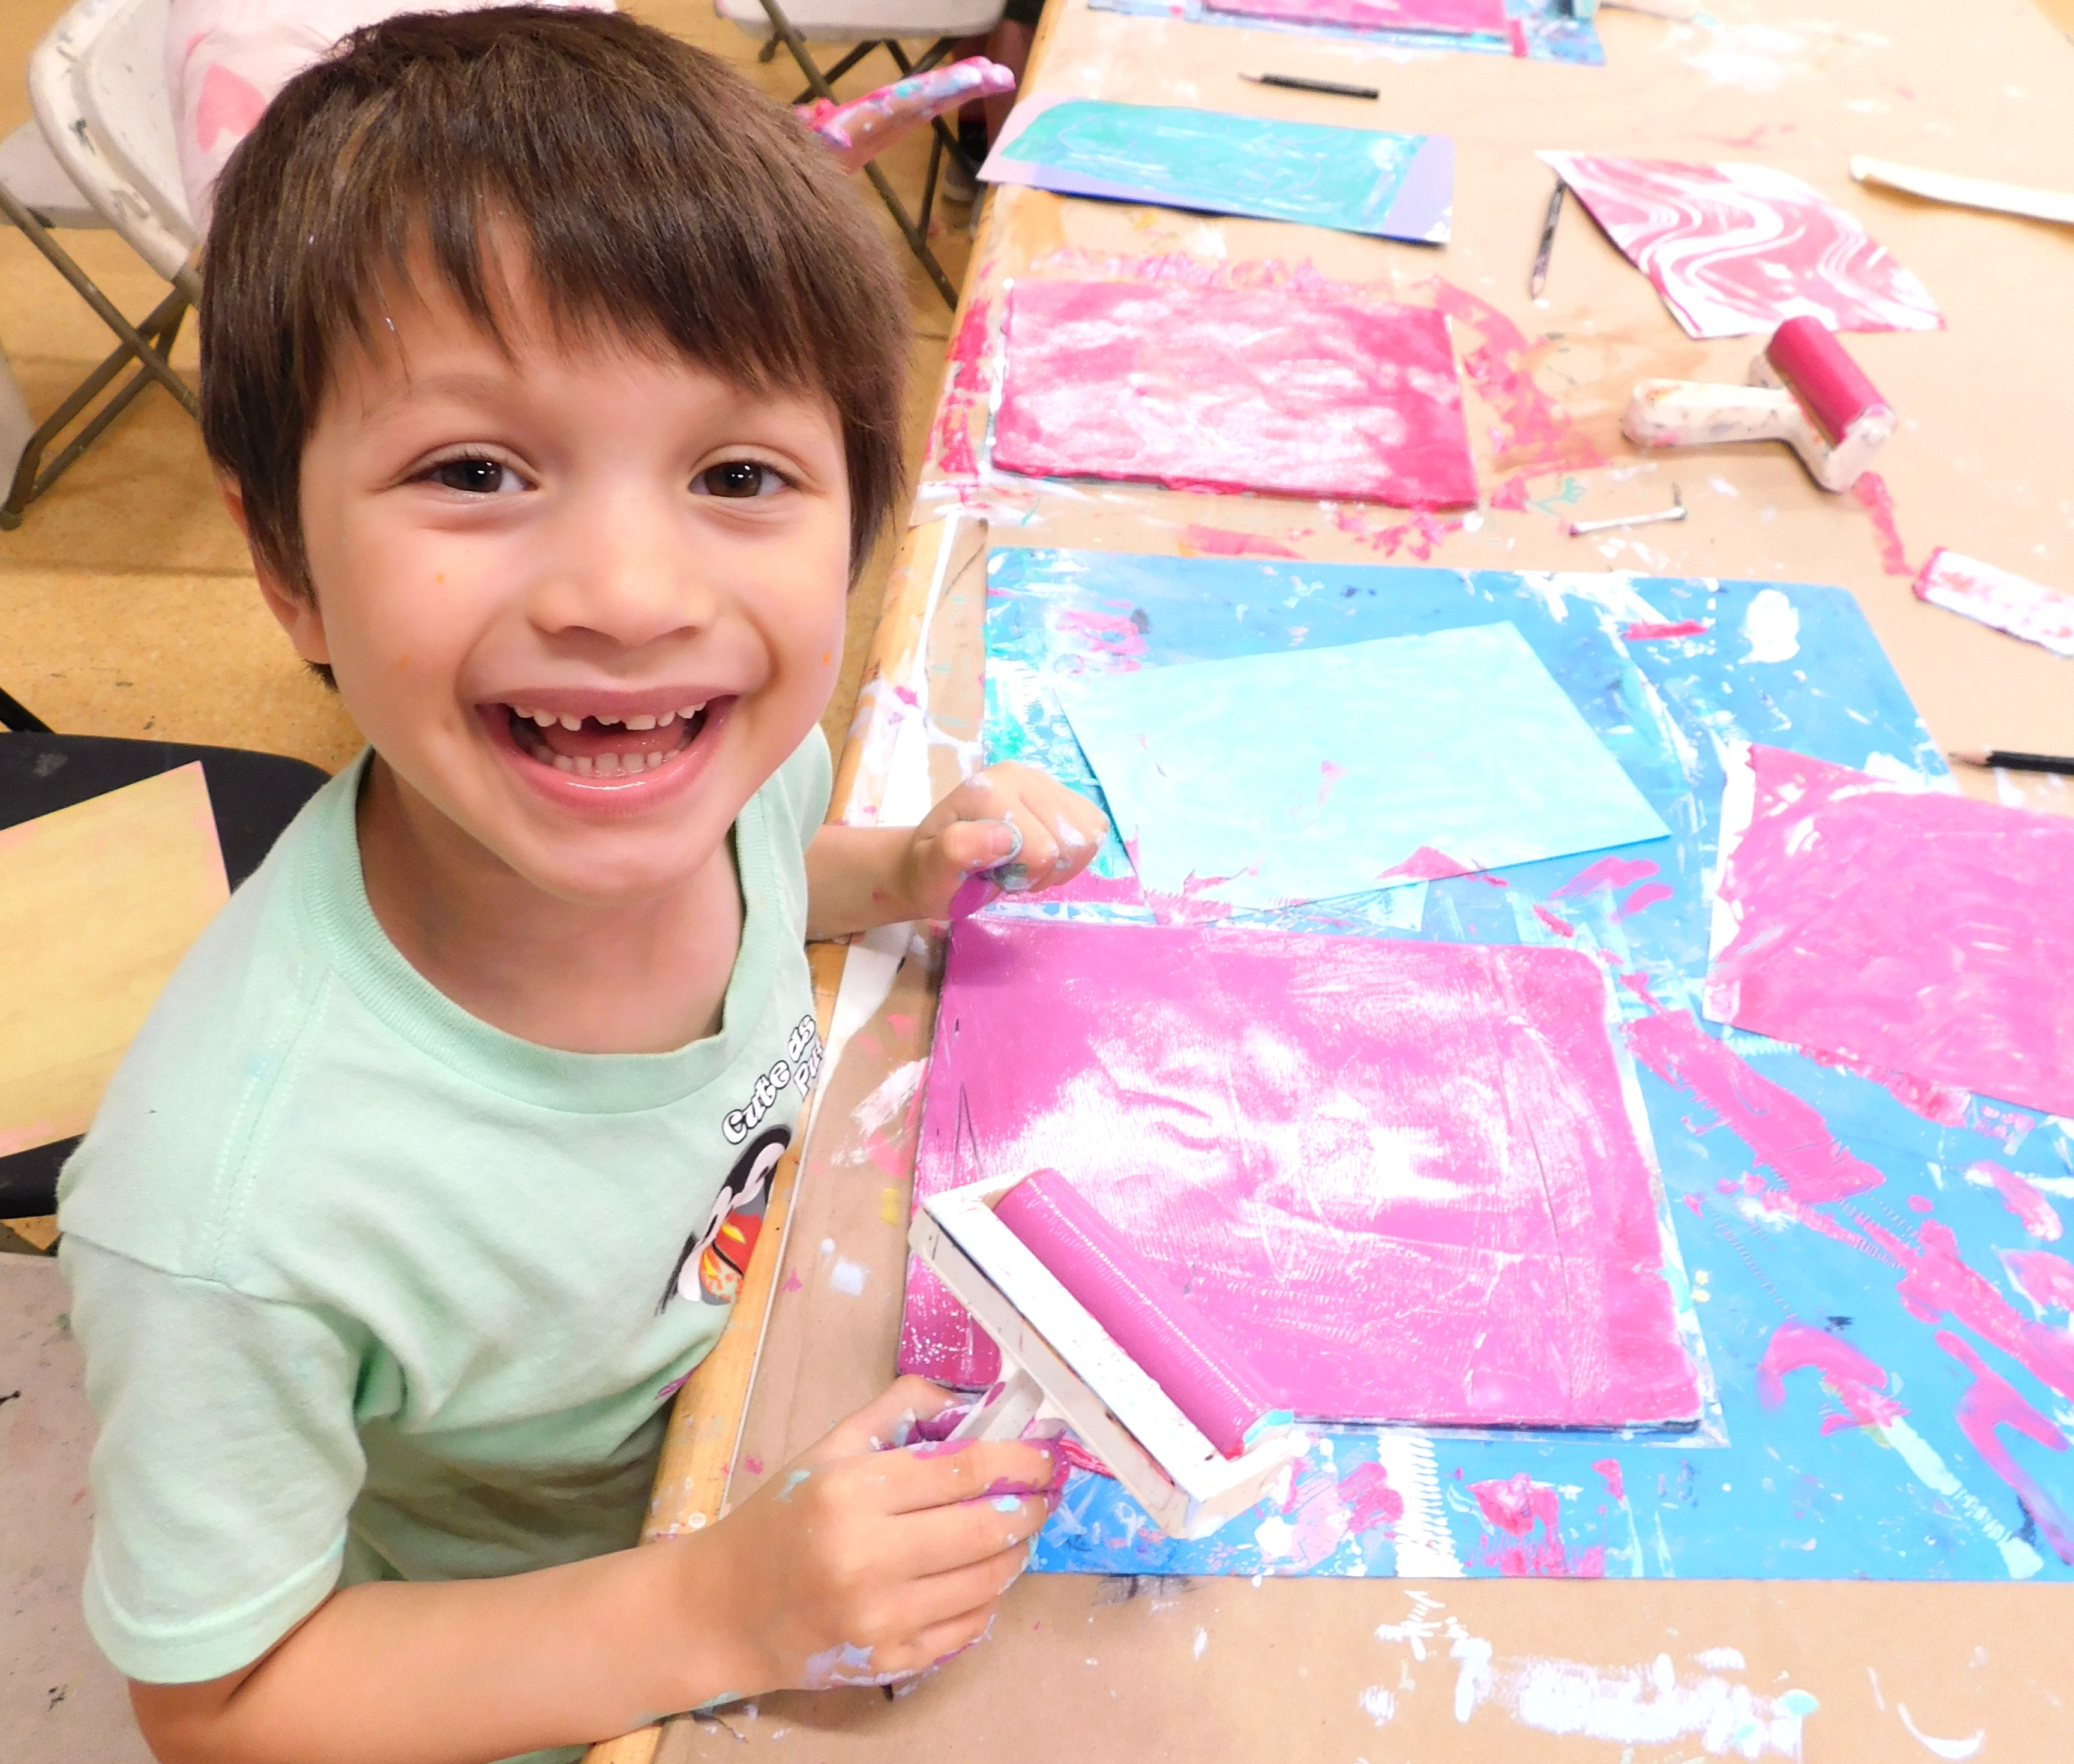 kid smiling at camera while painting